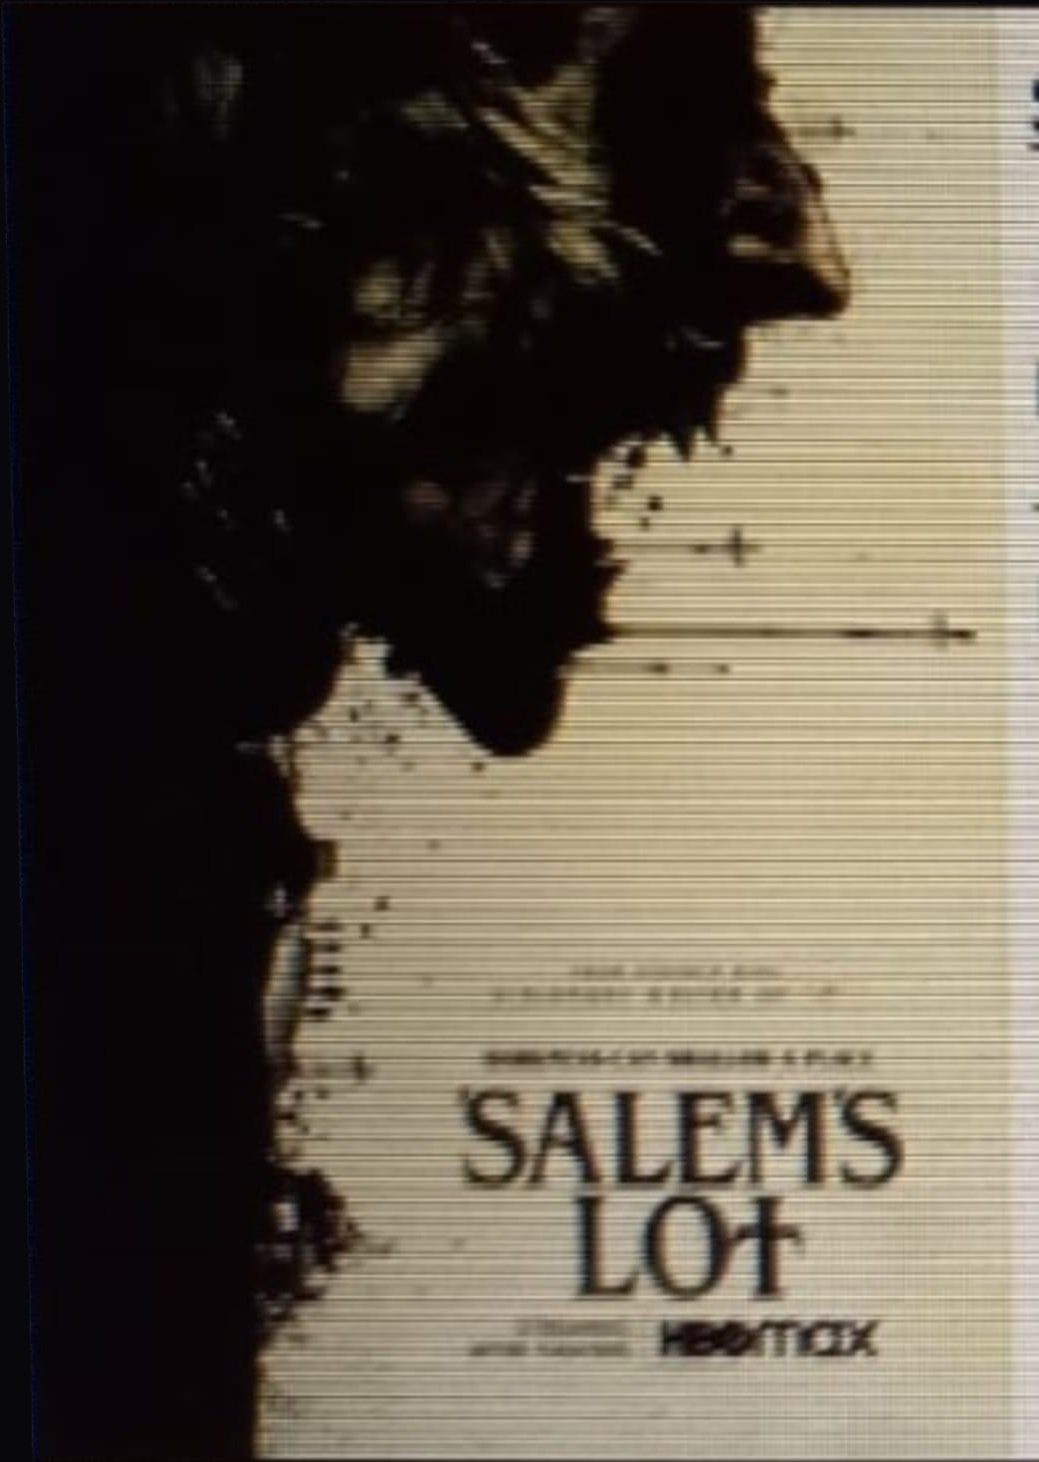 SALEM - King Night, Releases